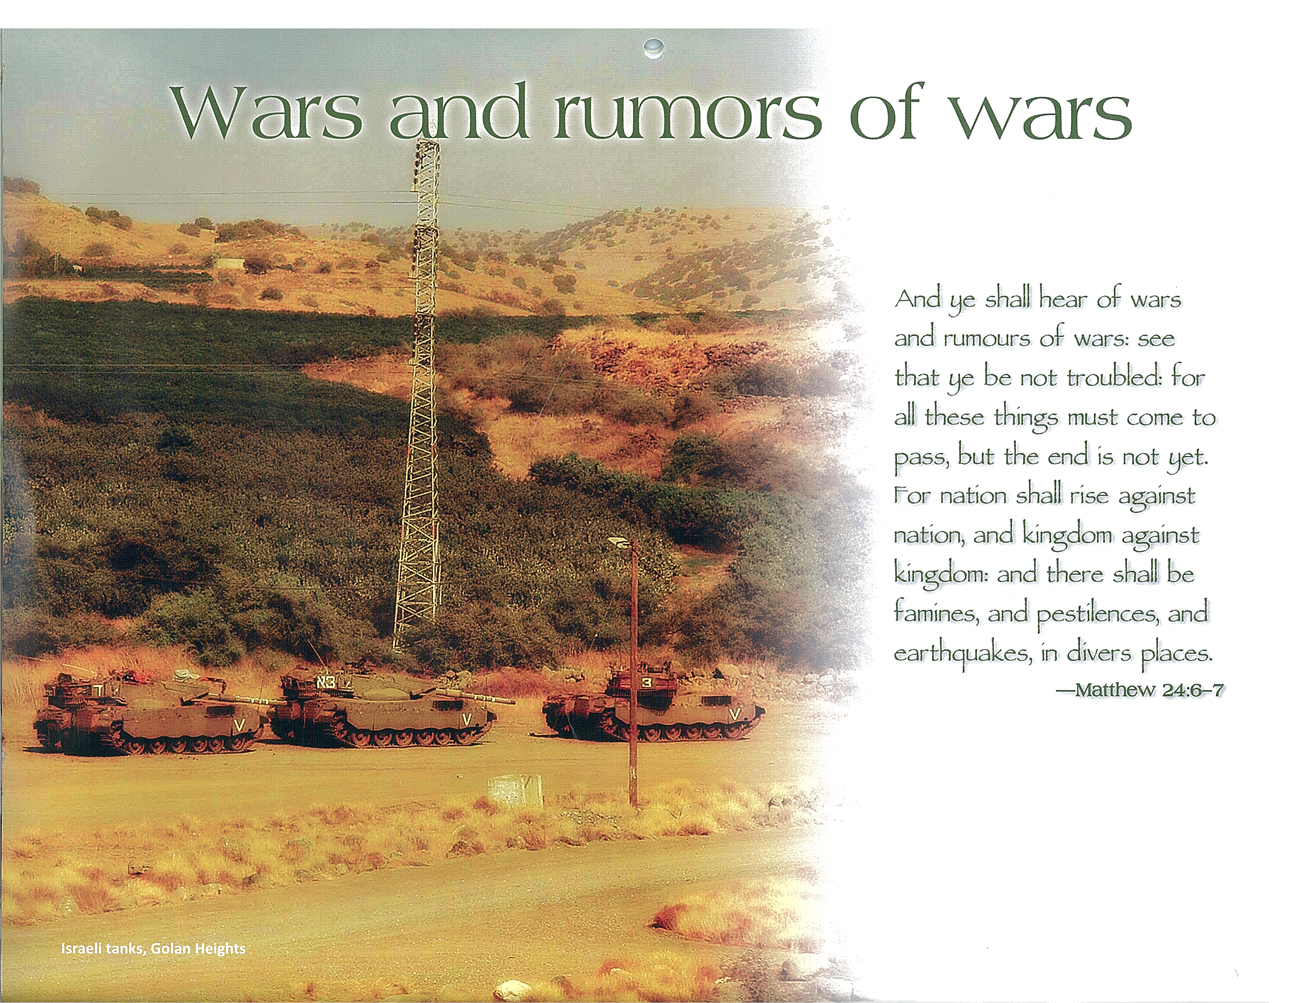 2010 Prophecy Calendar: August - Wars and rumors of wars